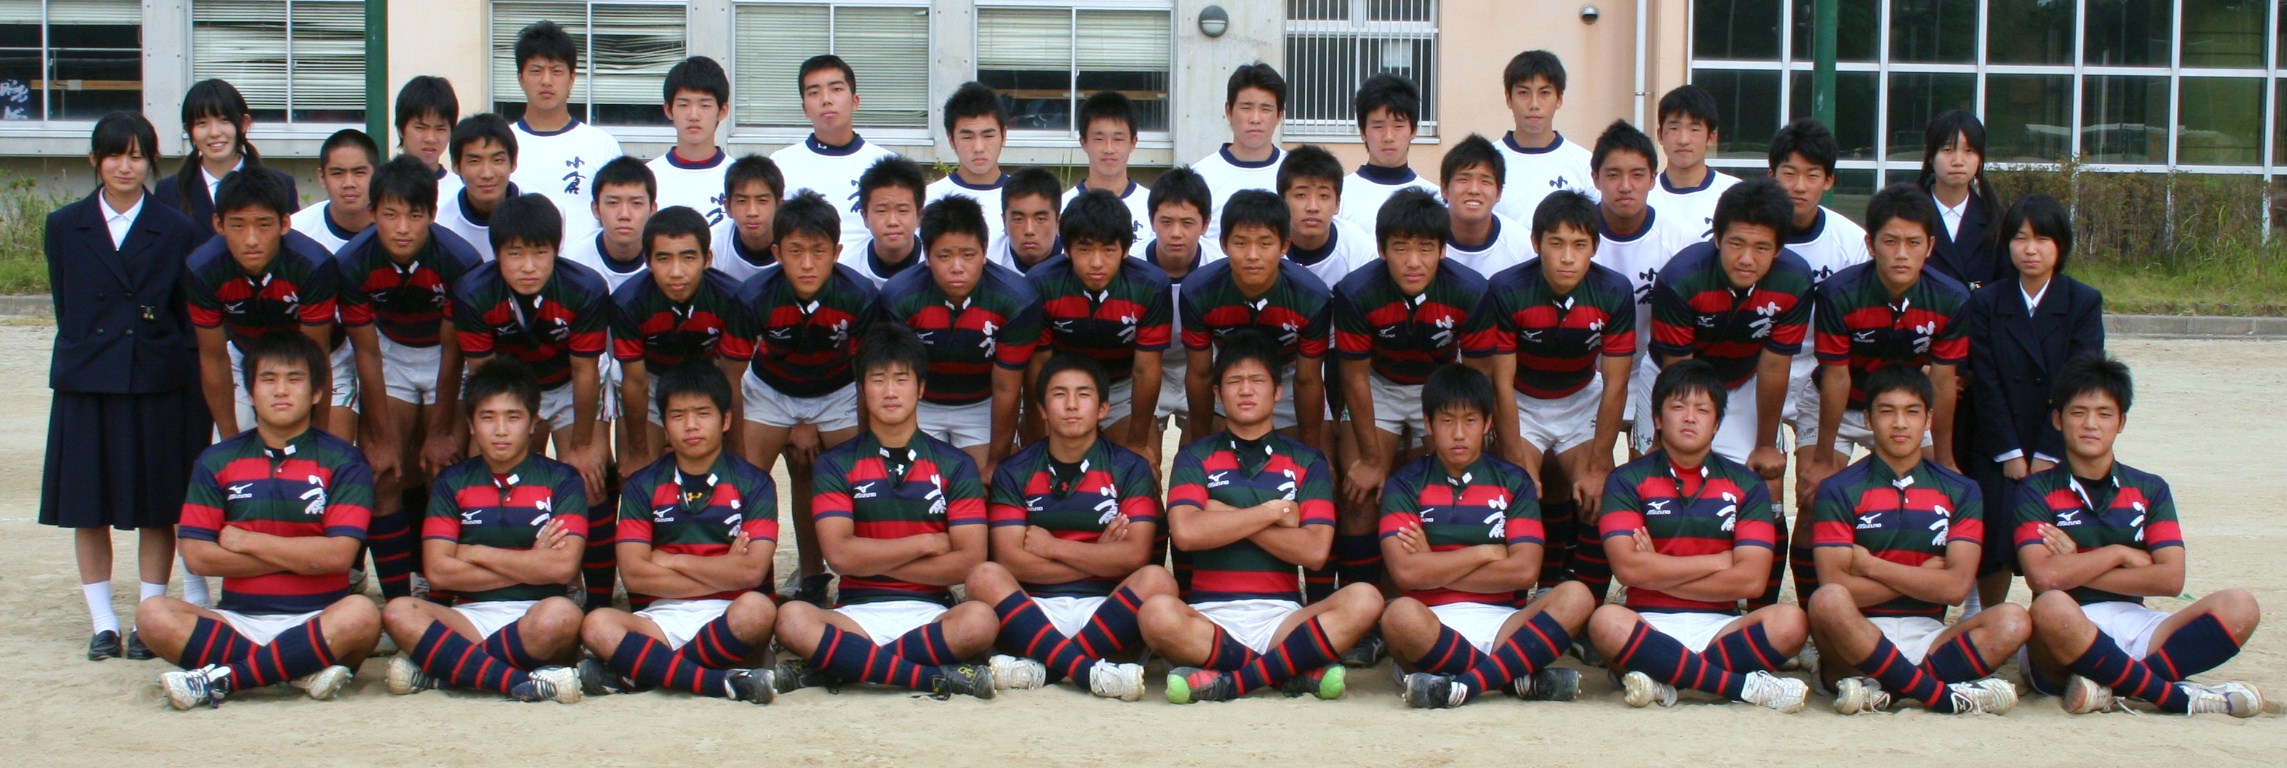 http://kokura-rugby.sakura.ne.jp/kokura-rugby.JPG